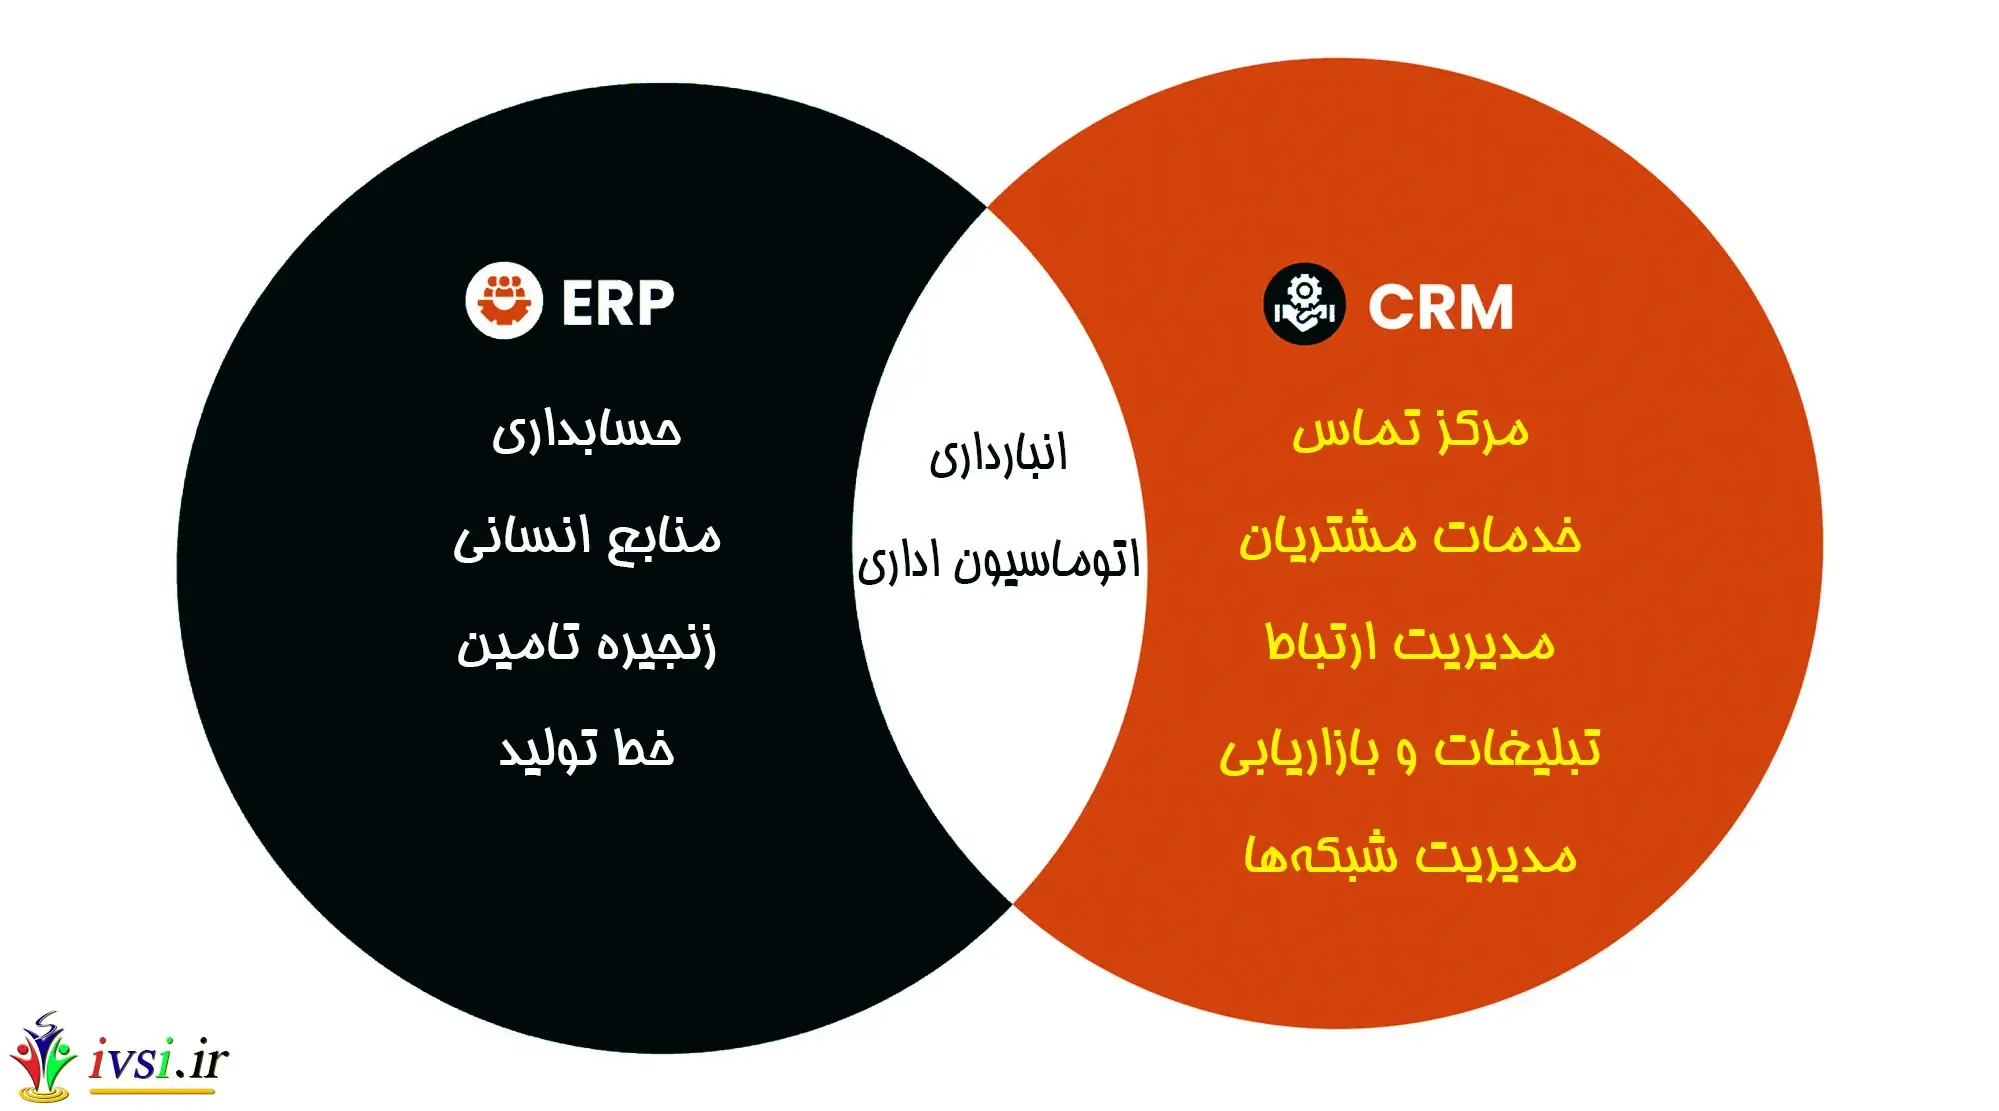 CRM در مقابل ERP